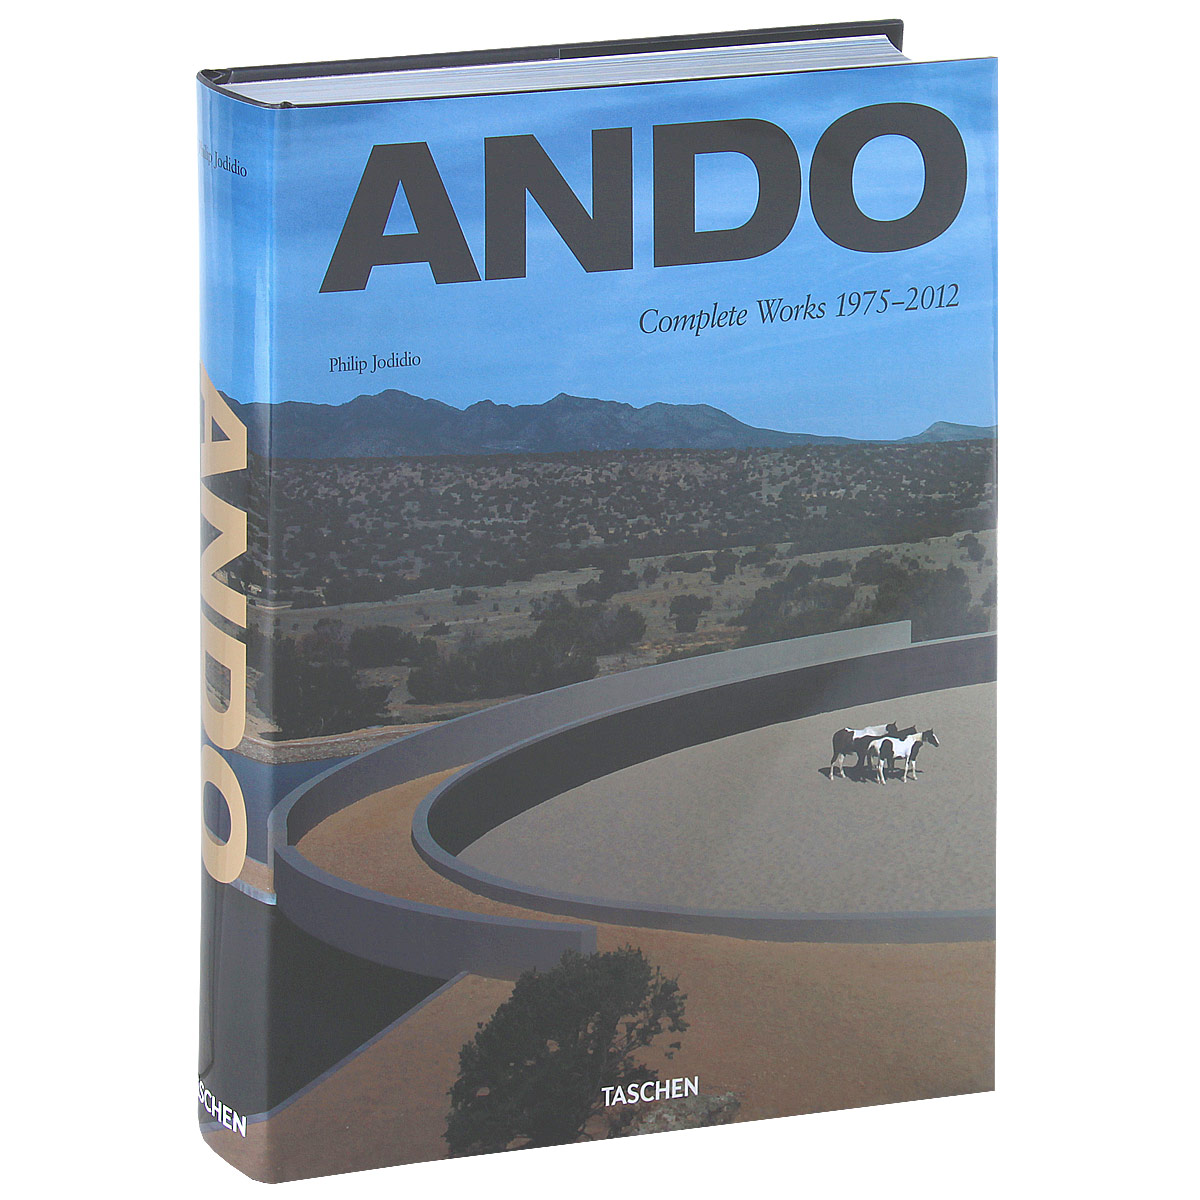 * ju-Ando. Complete Works 1975?2012 / Андо. Собрание работ 1975-2012